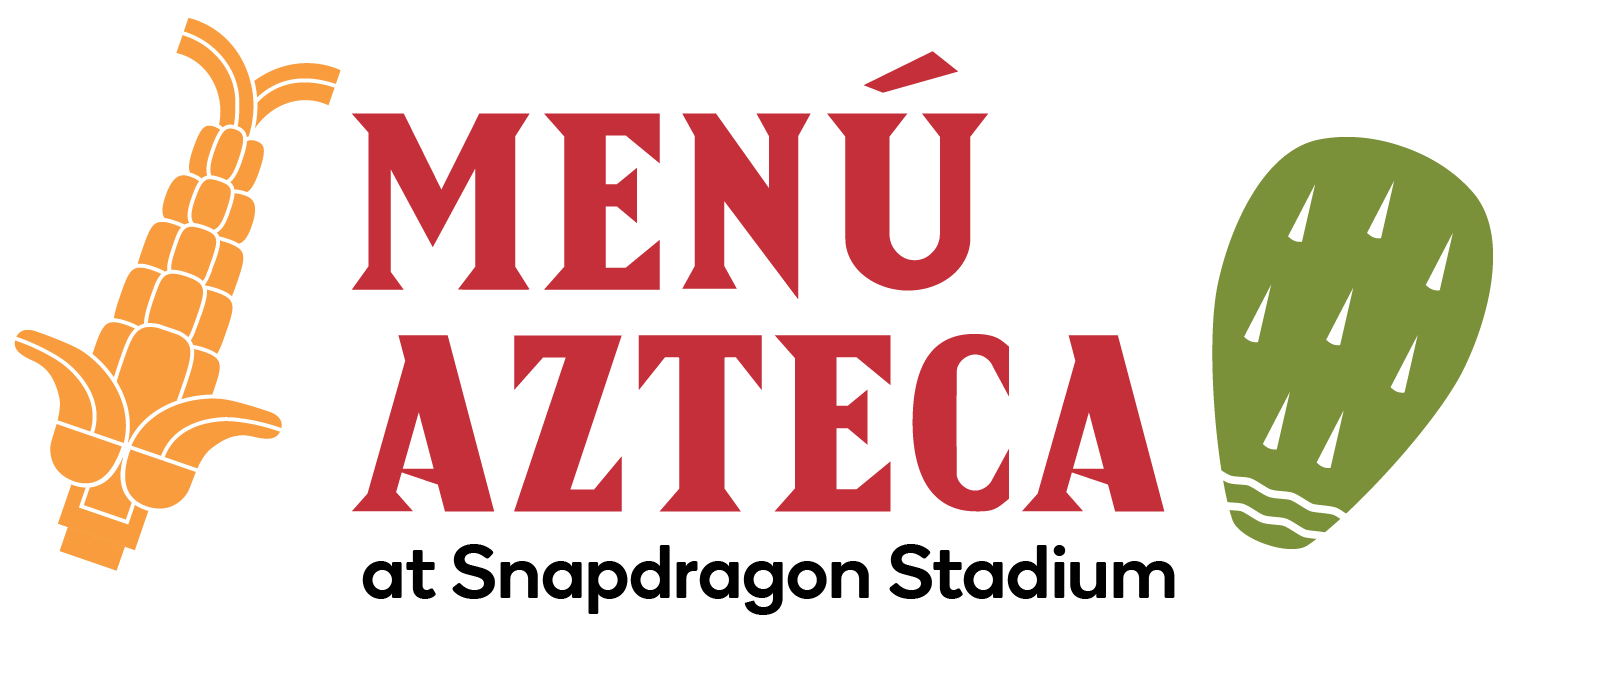 Menu Azteca Logo